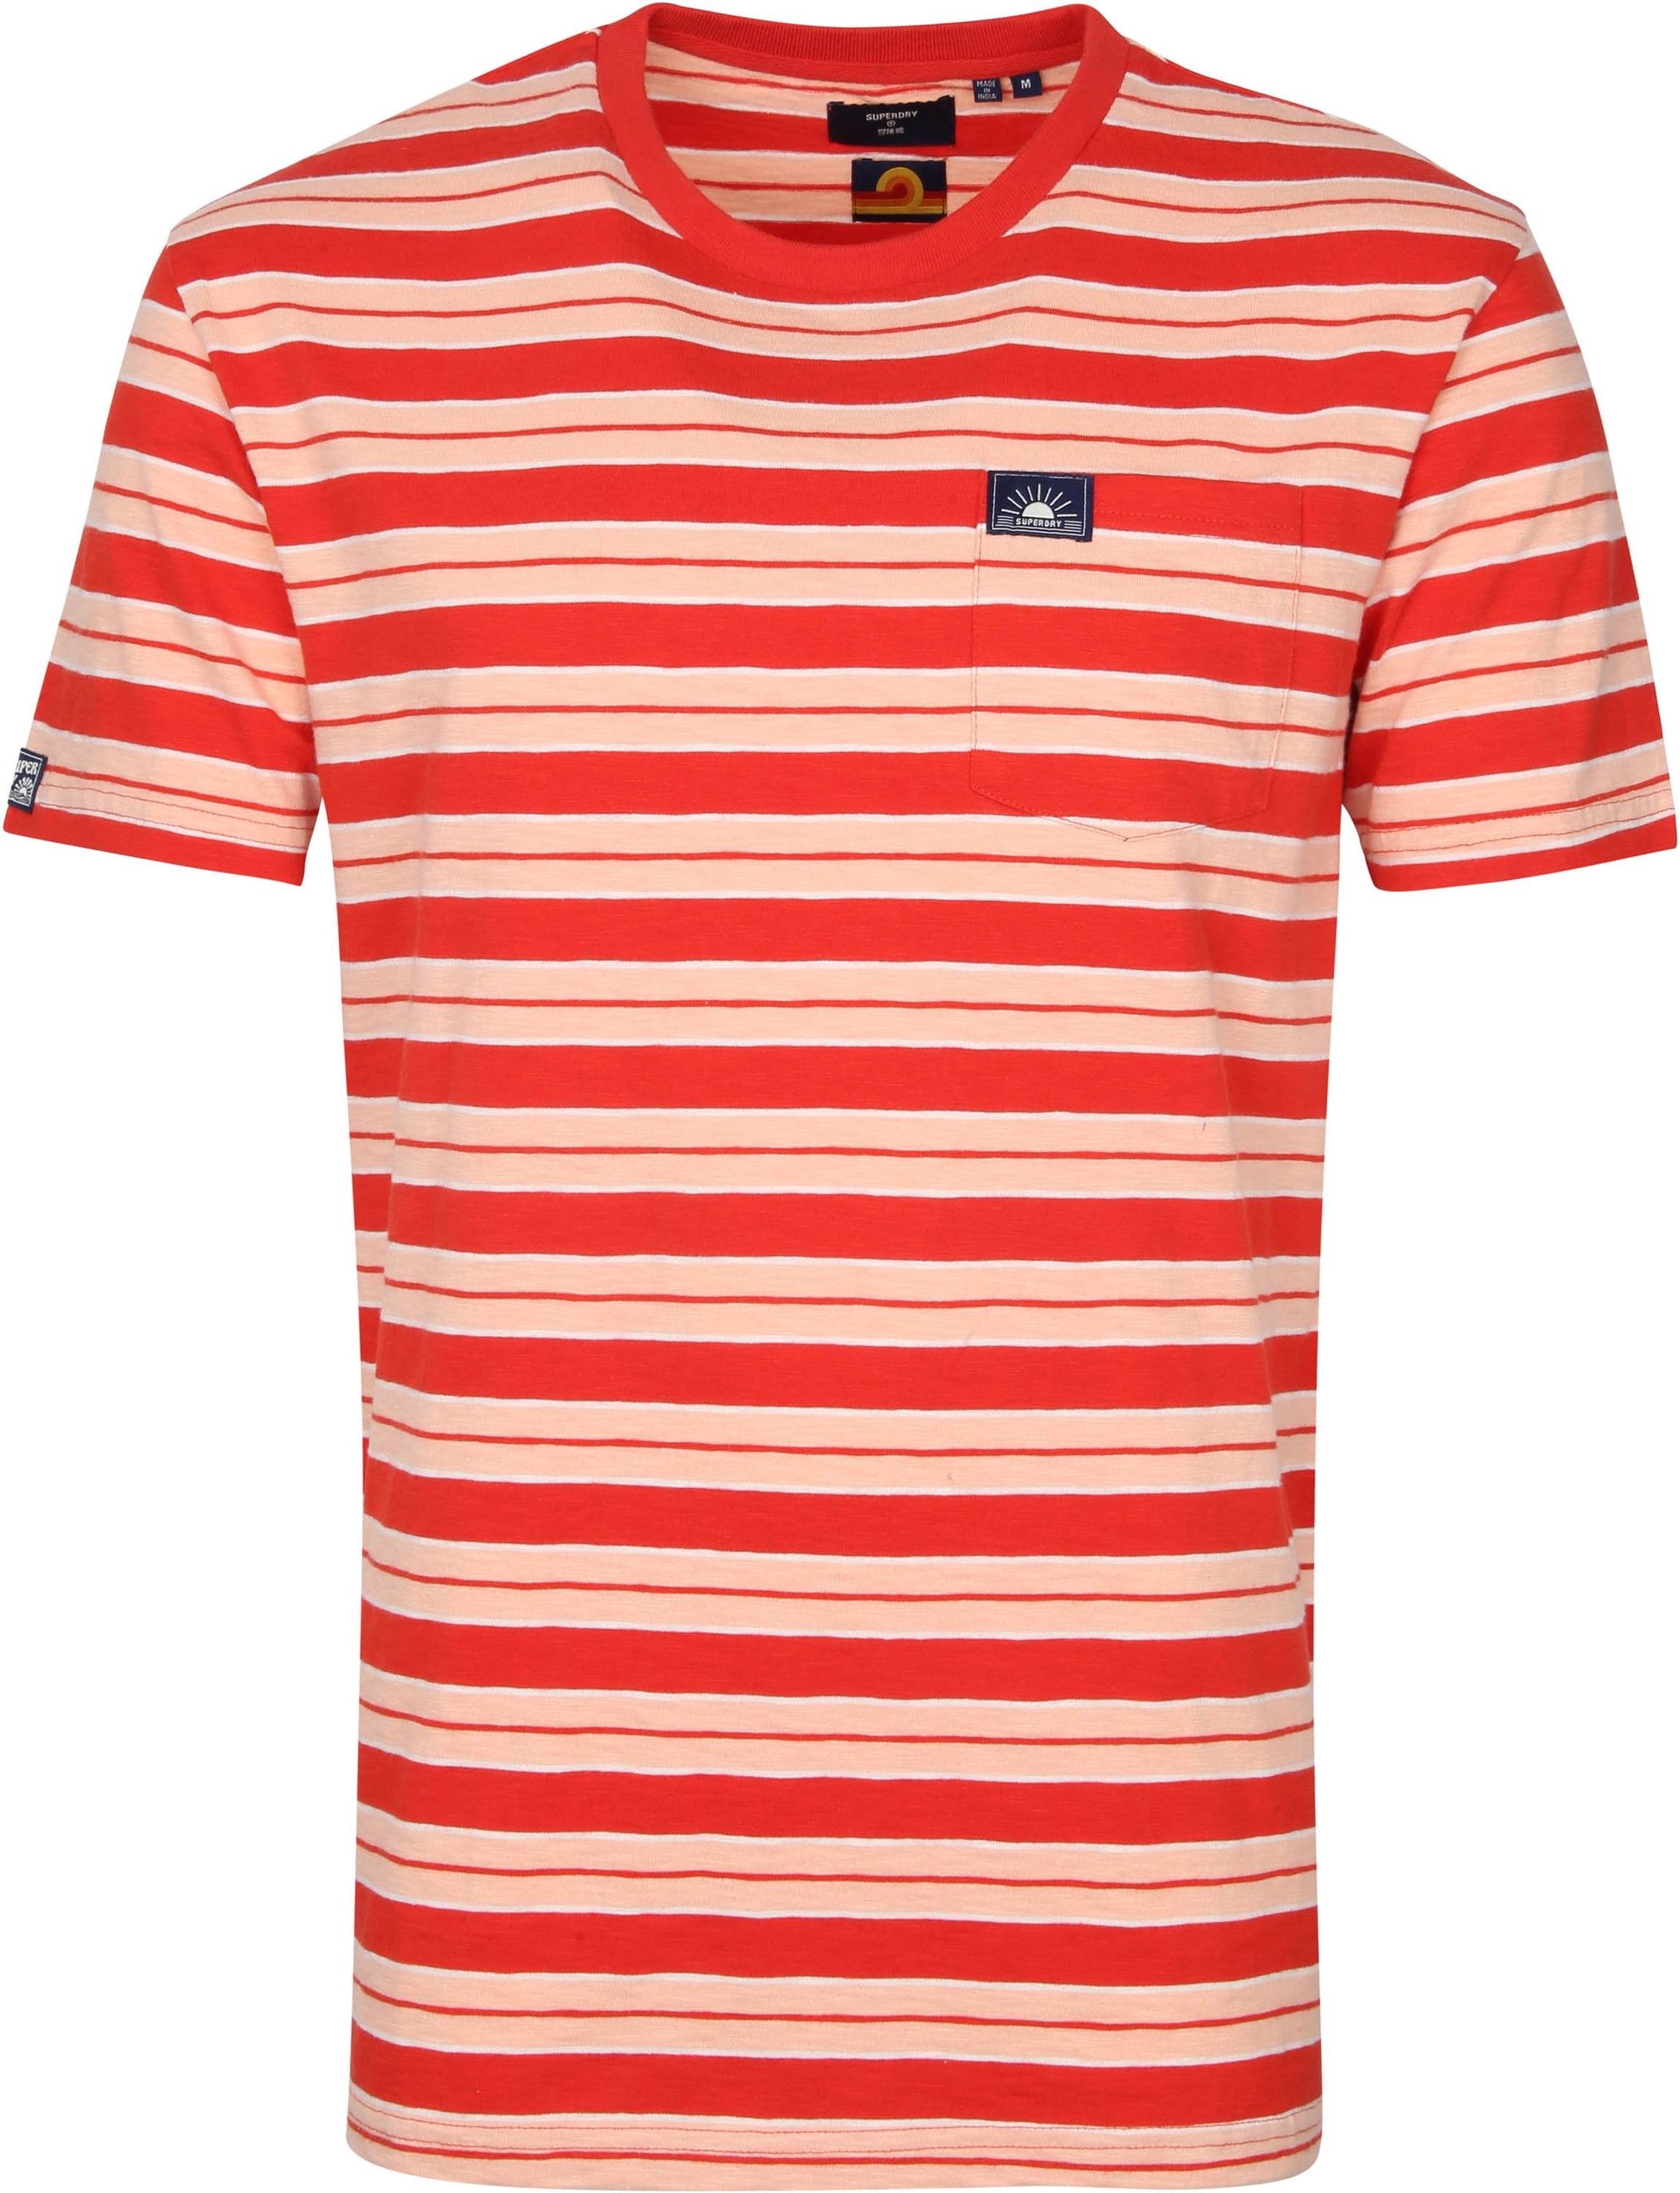 Superdry Surf T Shirt Stripes Red size L